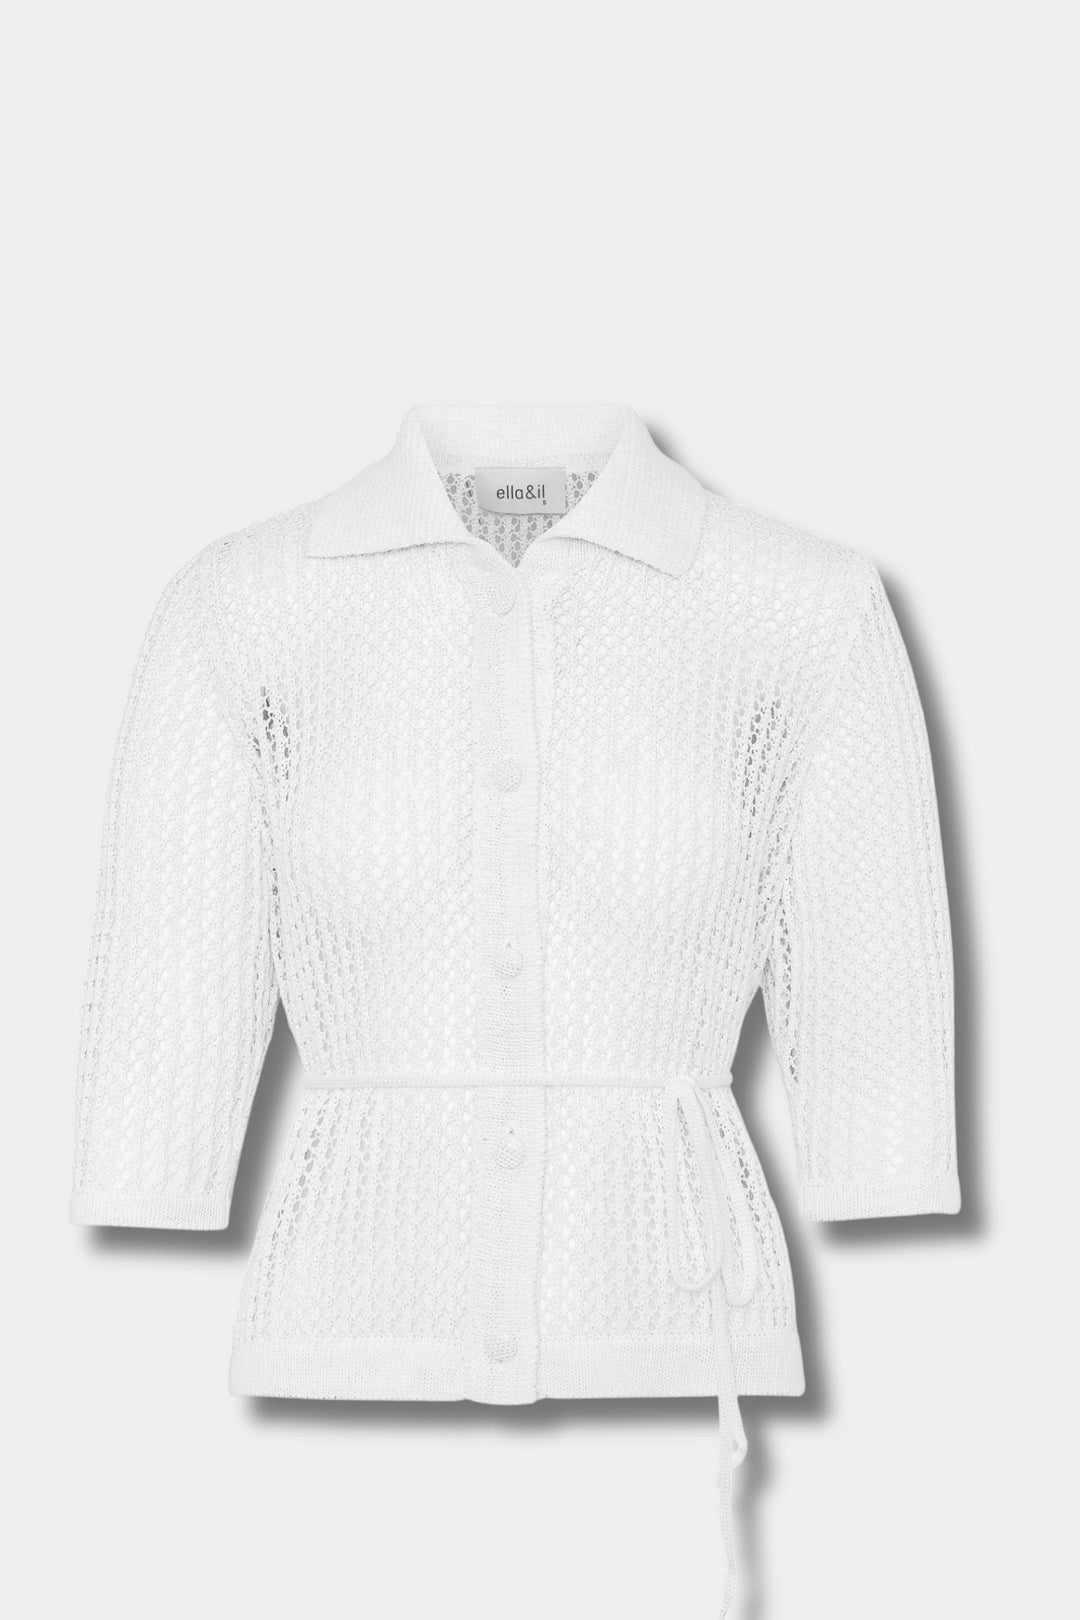 Lima Crochet Shirt- White